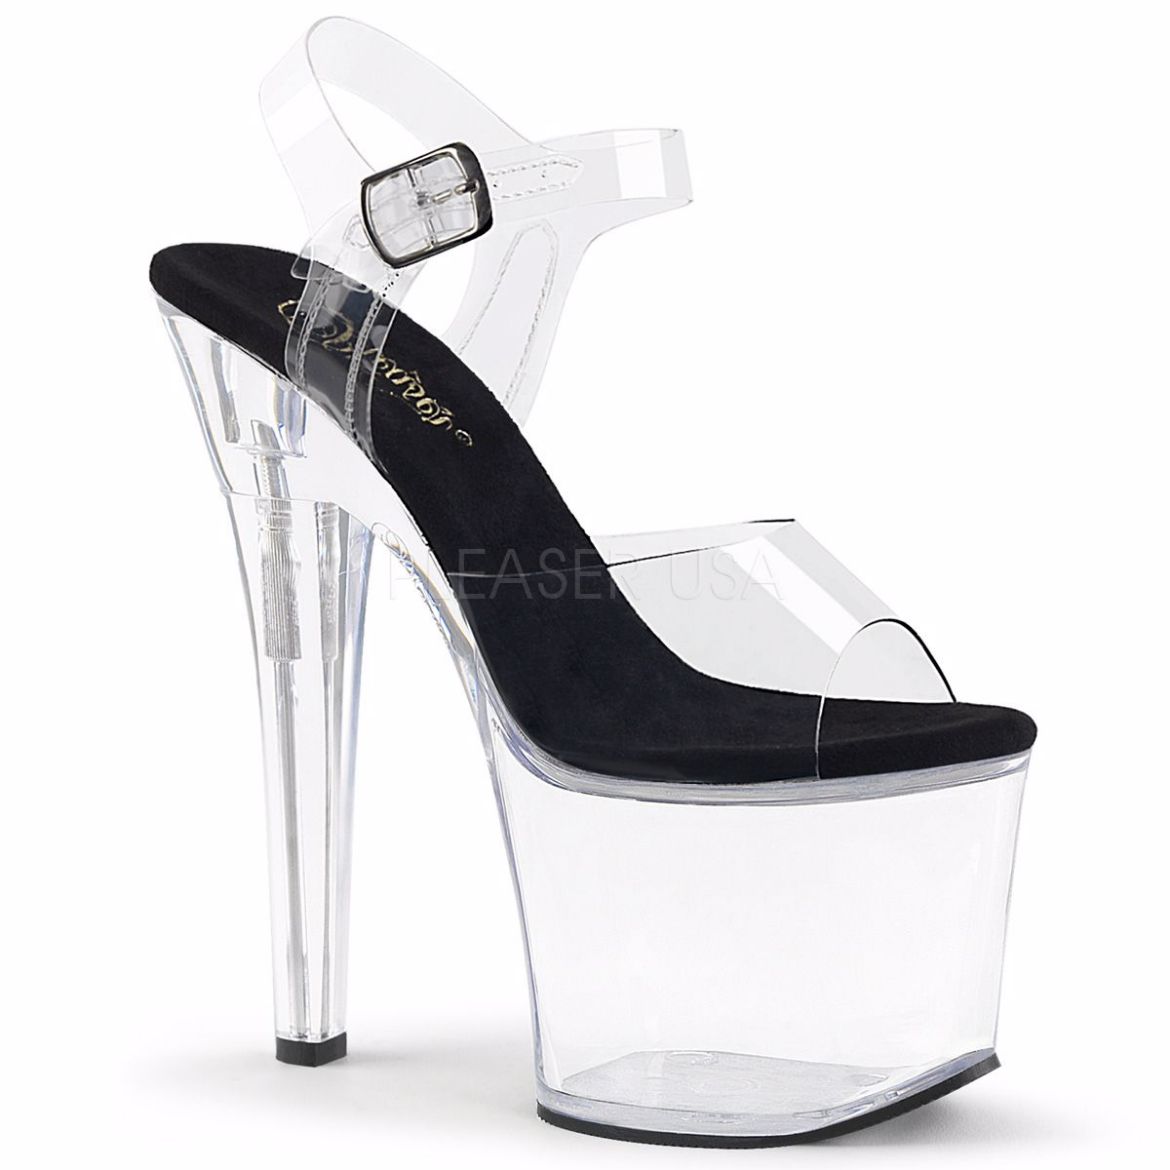 Product image of Pleaser Radiant-708 Clear-Black/Clear, 7 inch (17.8 cm) Heel, 3 1/4 inch (8.3 cm) Platform Sandal Shoes